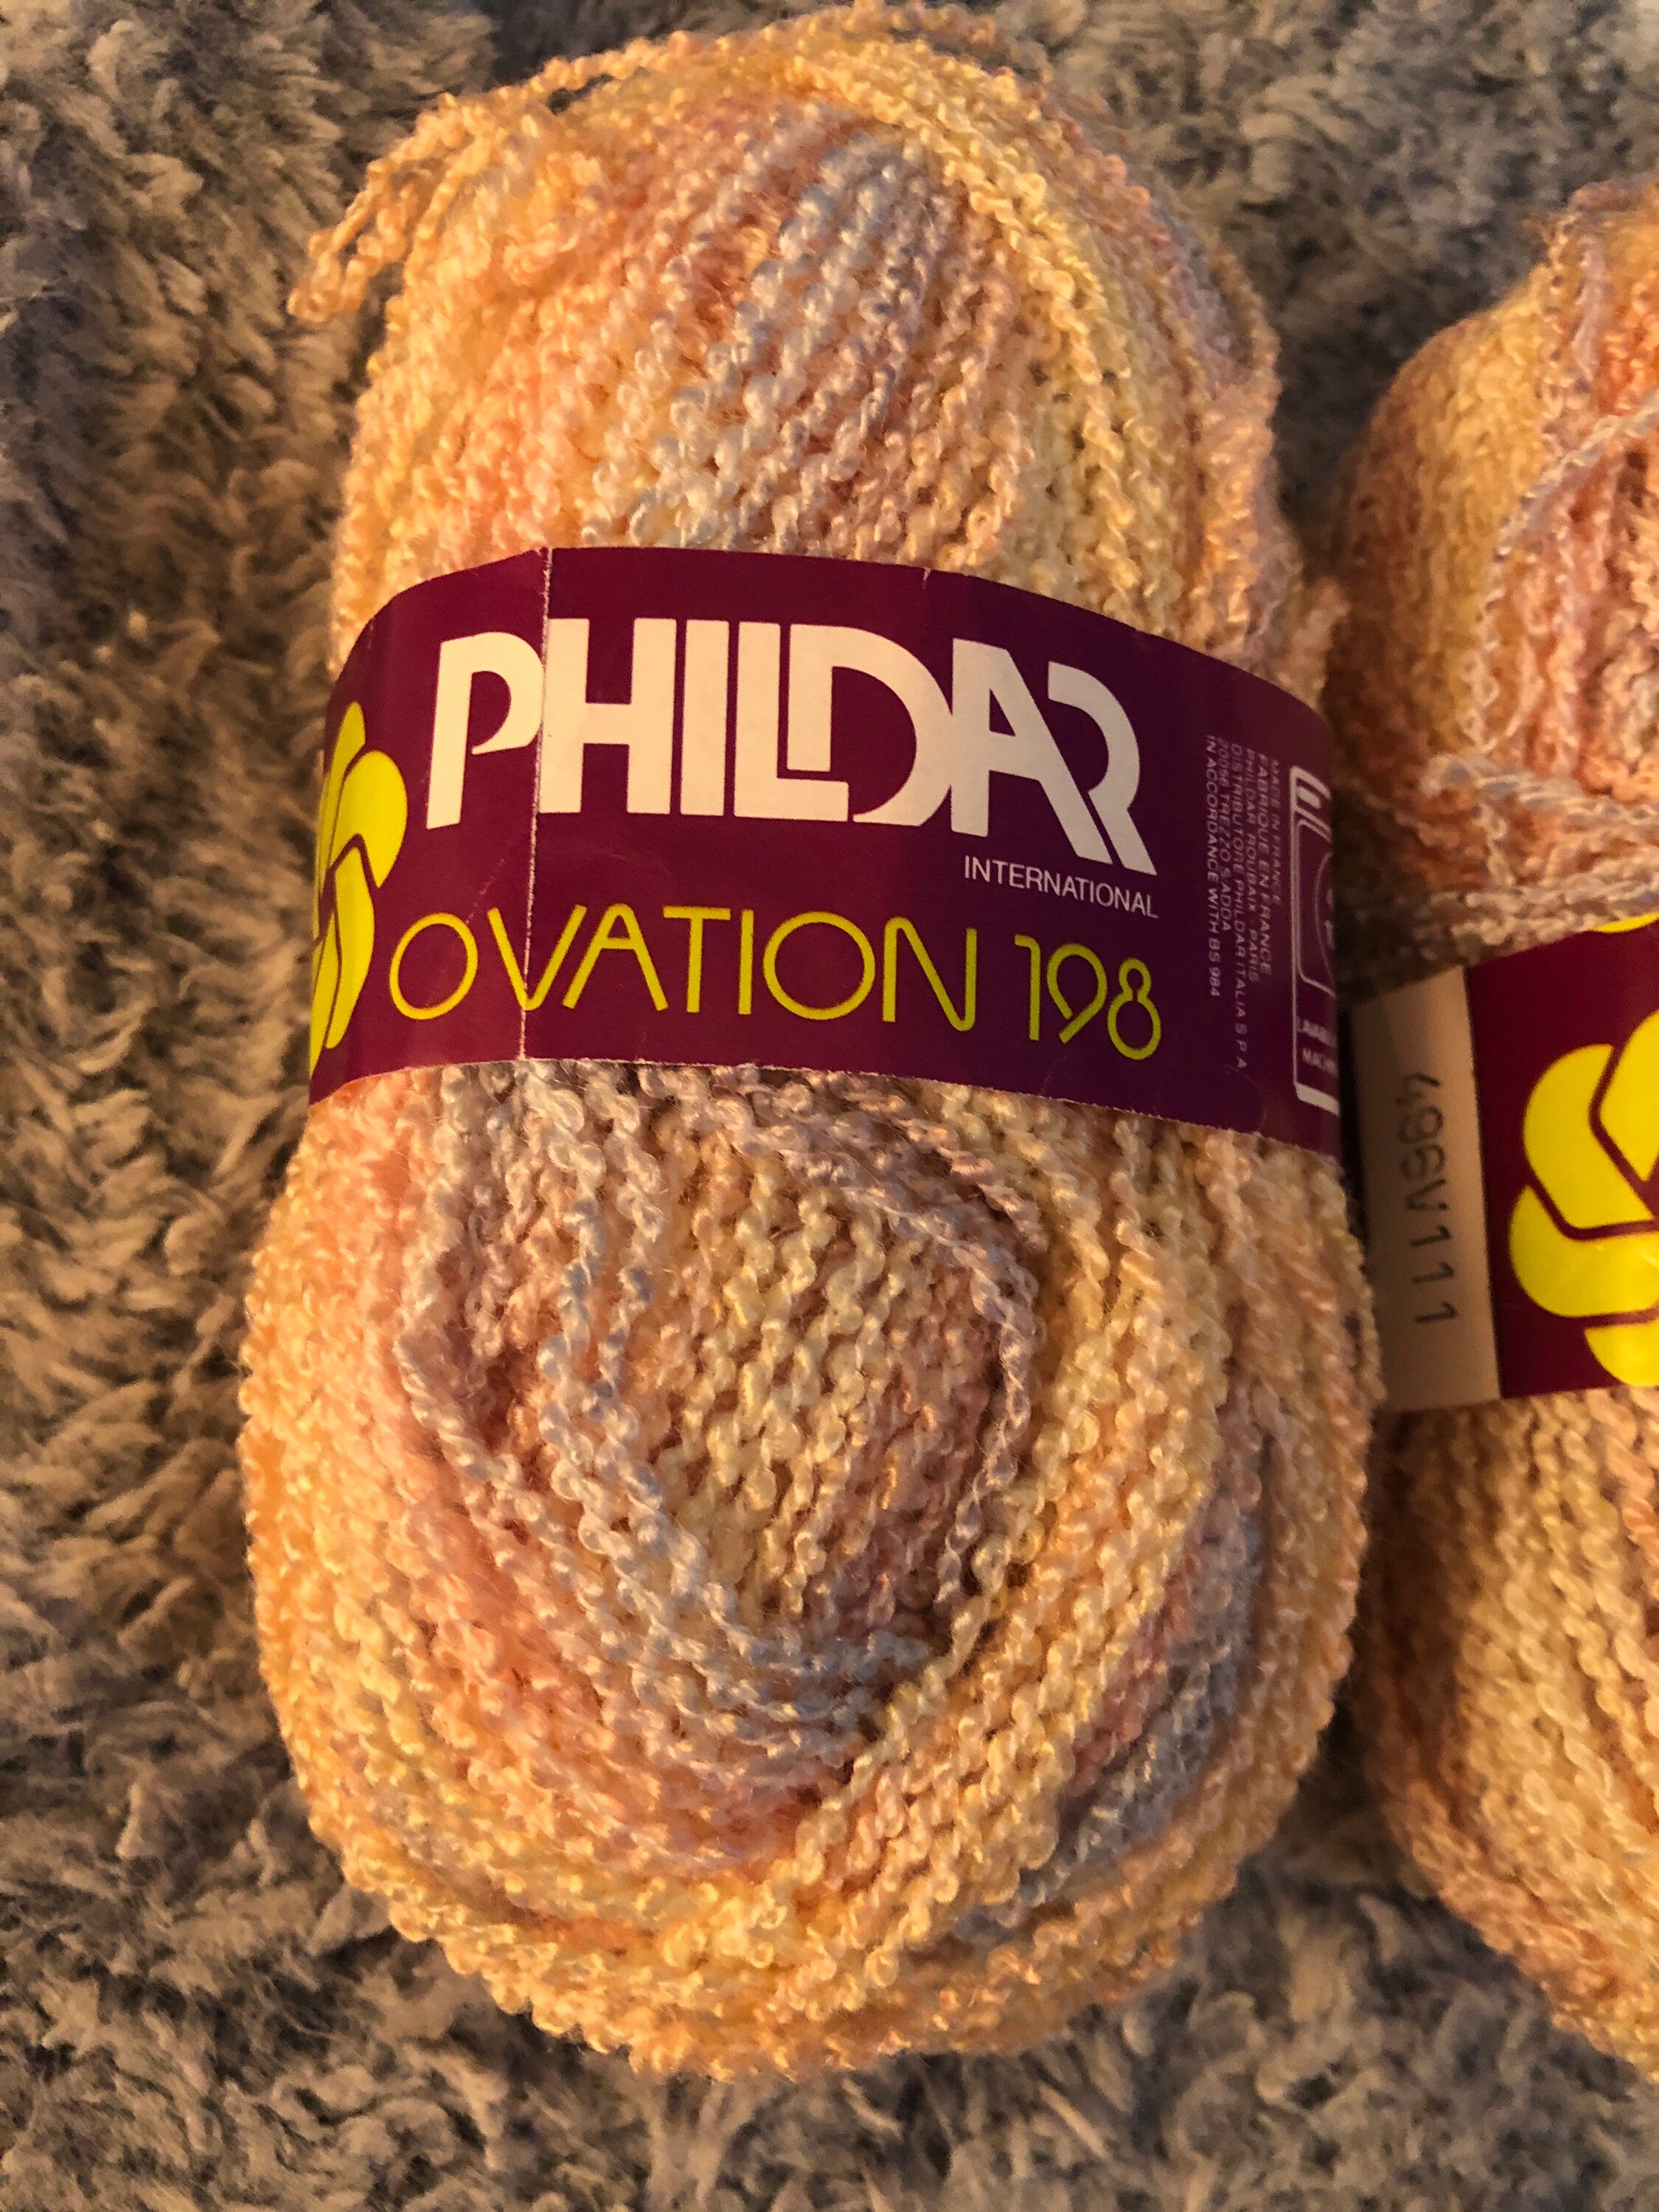 Ribbon Yarn, Eucalyptus Yarn, Aran Weight Yarn, Summer Yarn, Biodegradable  Yarn Phildar EUCALYPTUS, Lyocell Yarn for Crochet and Knitting 